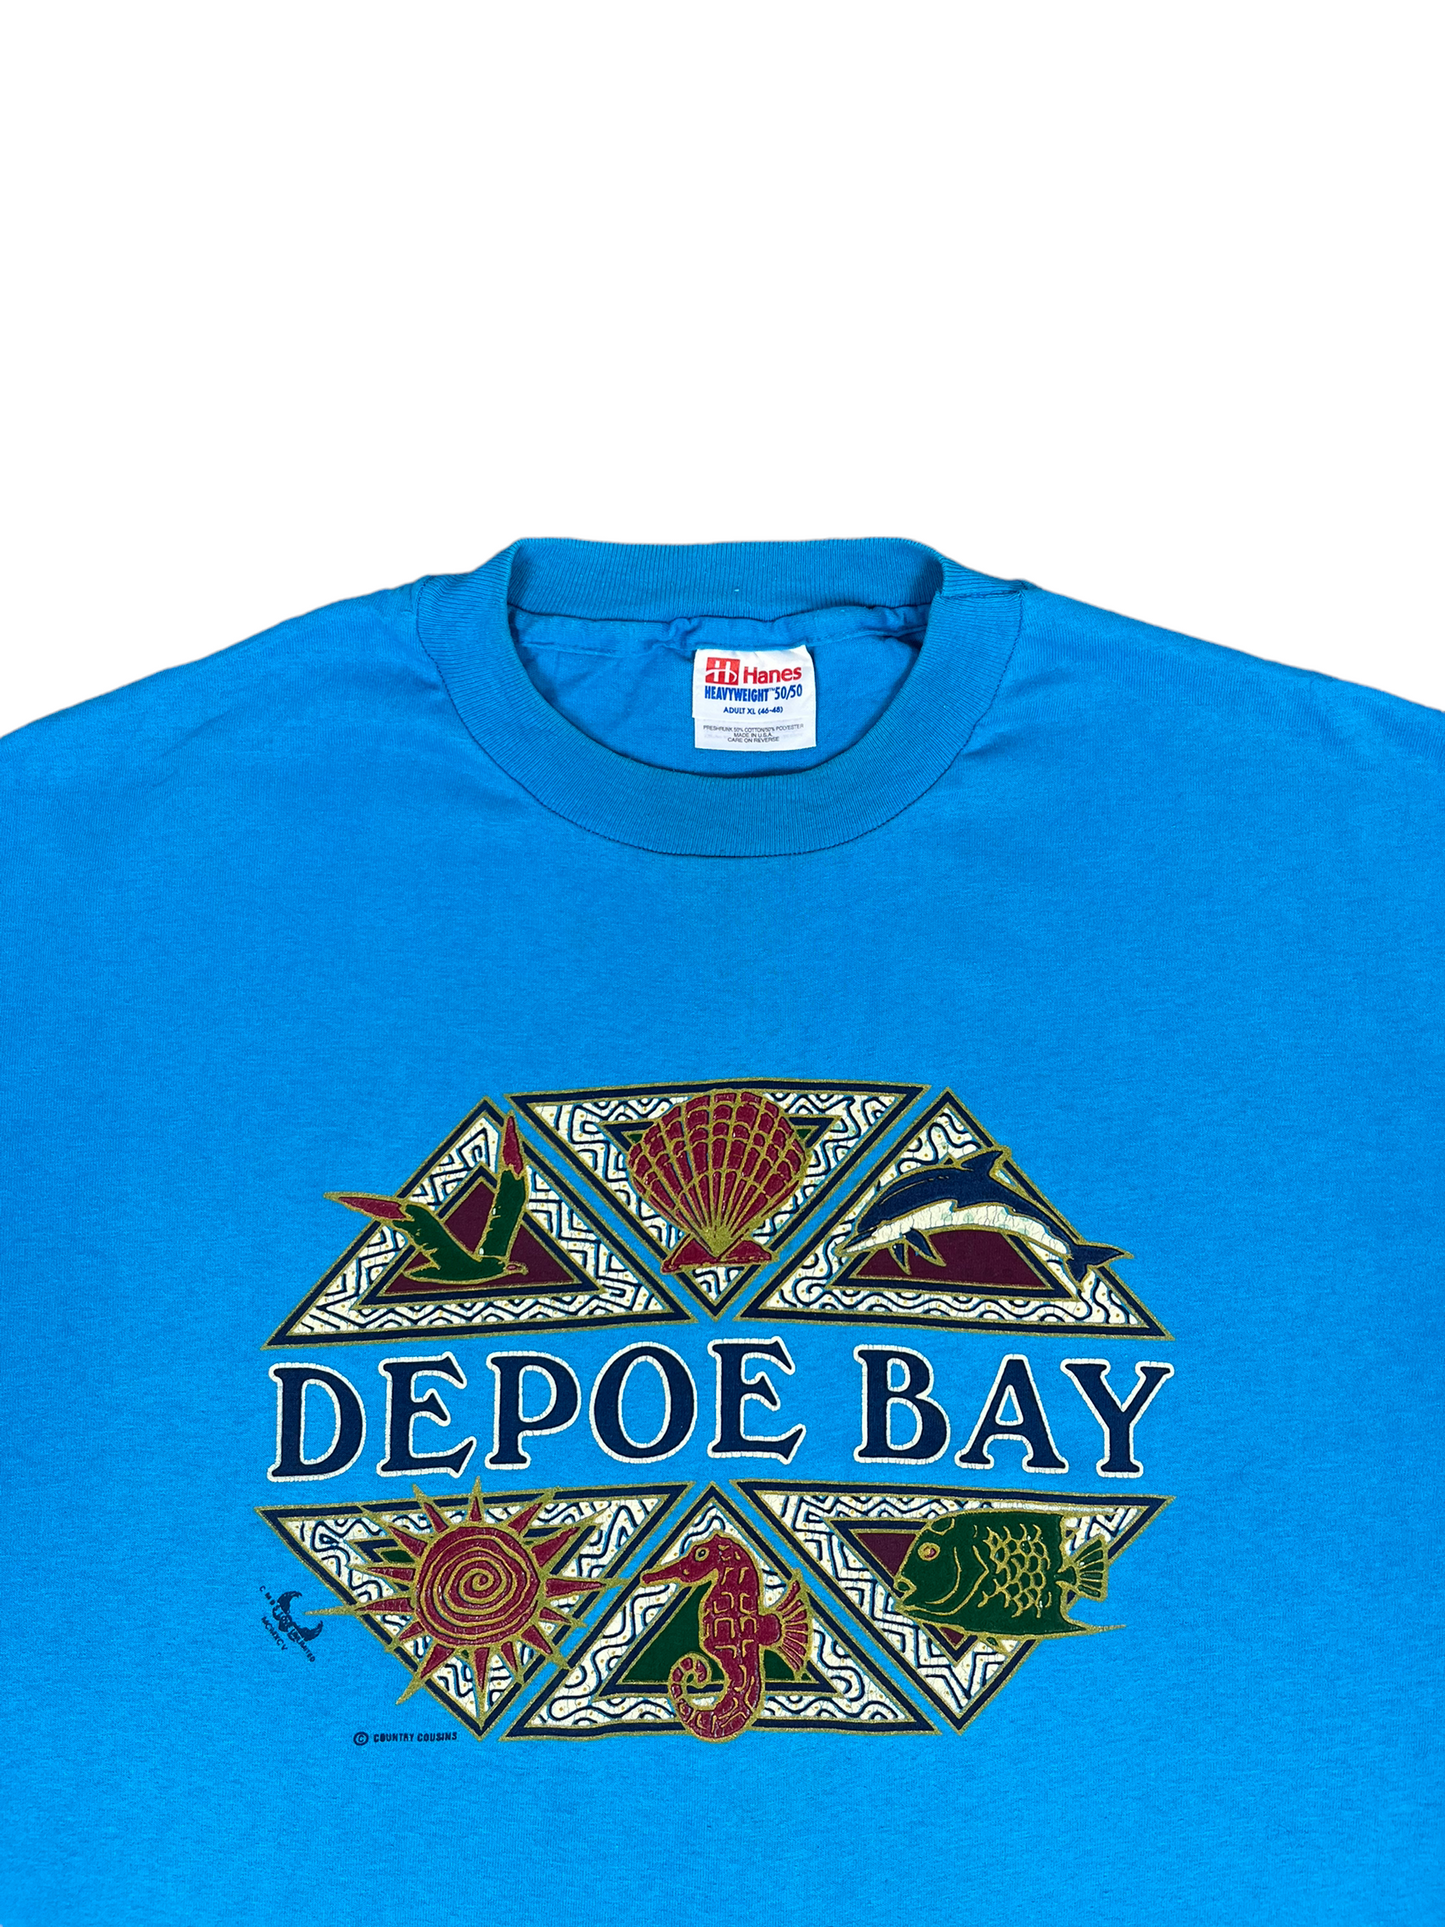 Women's Vintage 90’s Depoe Bay T Shirt - XL